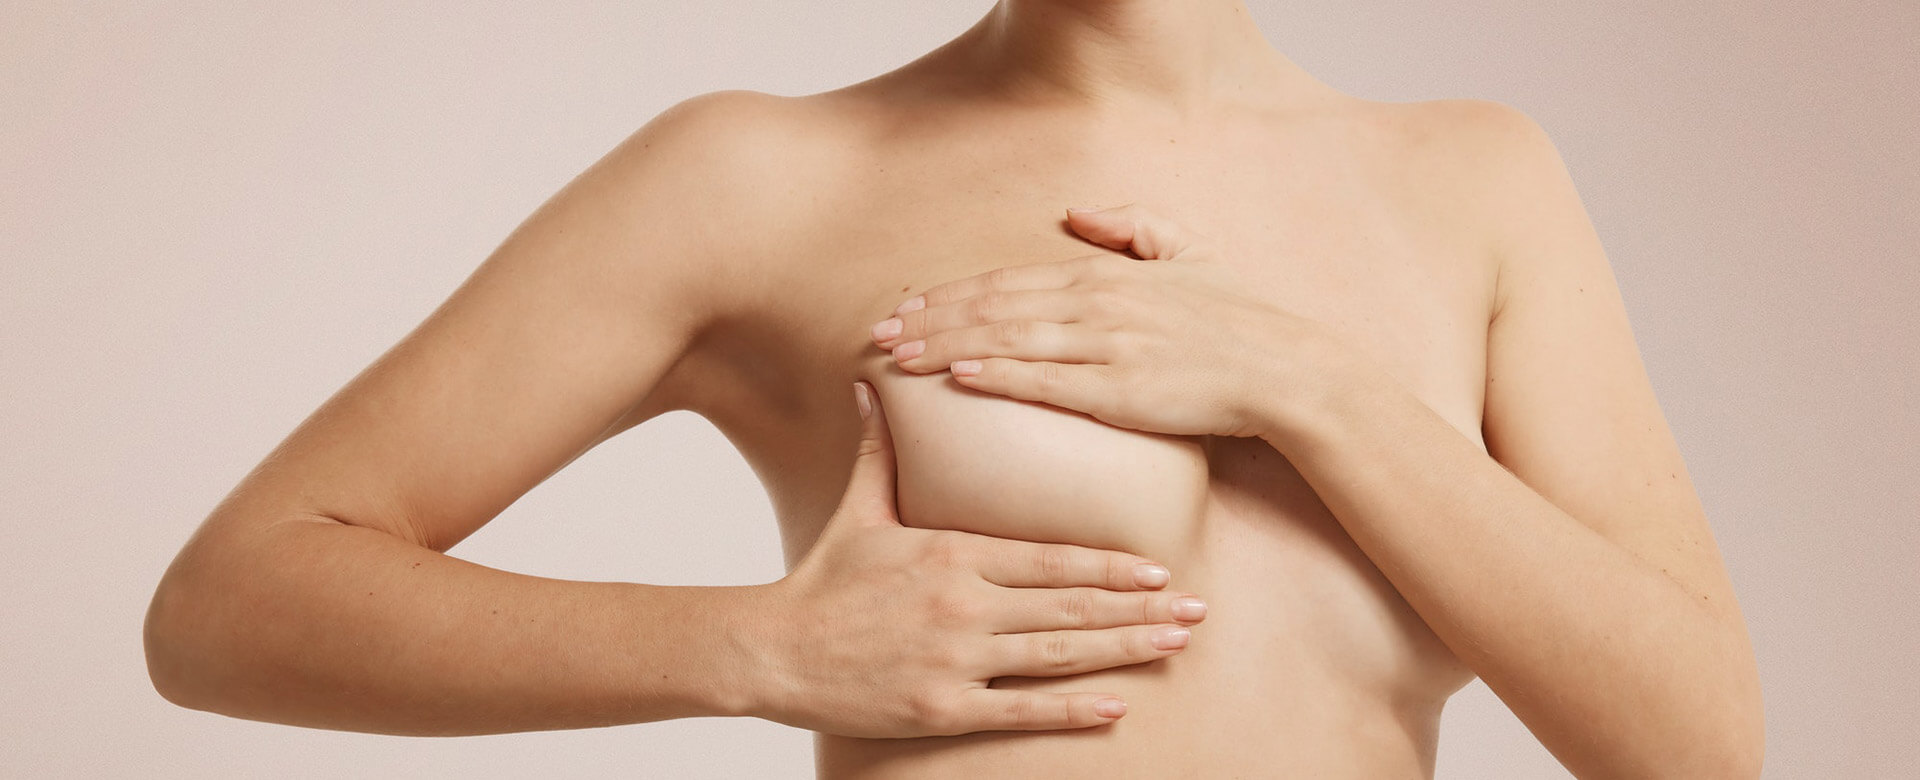 Ways to Fix Uneven Breasts